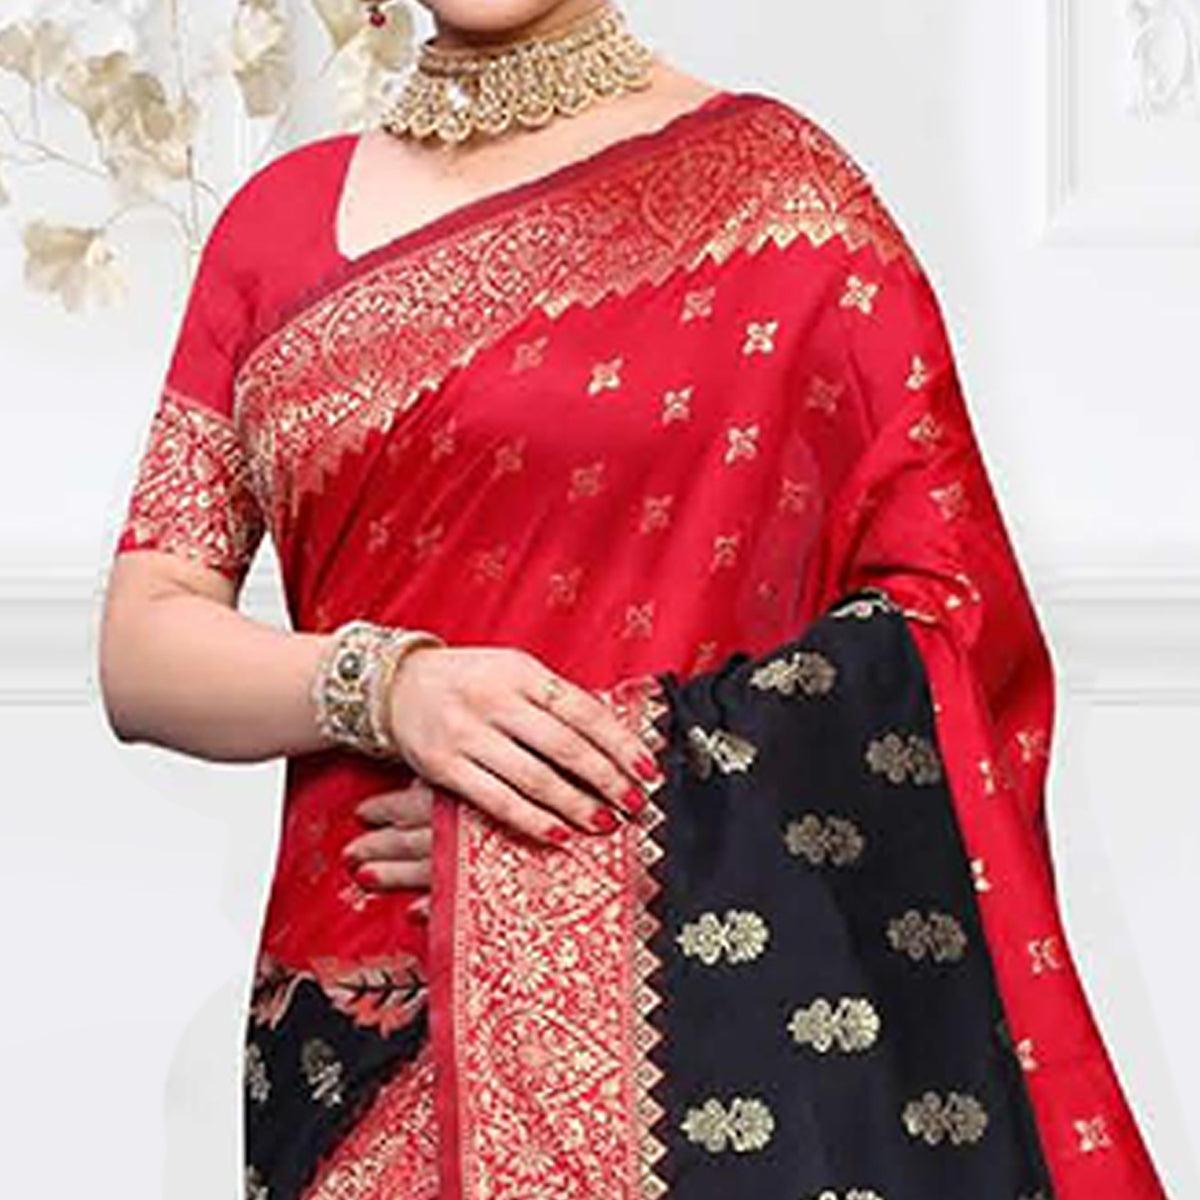 Exceptional Red - Black Colored Festive Wear Woven Art Silk Saree - Peachmode